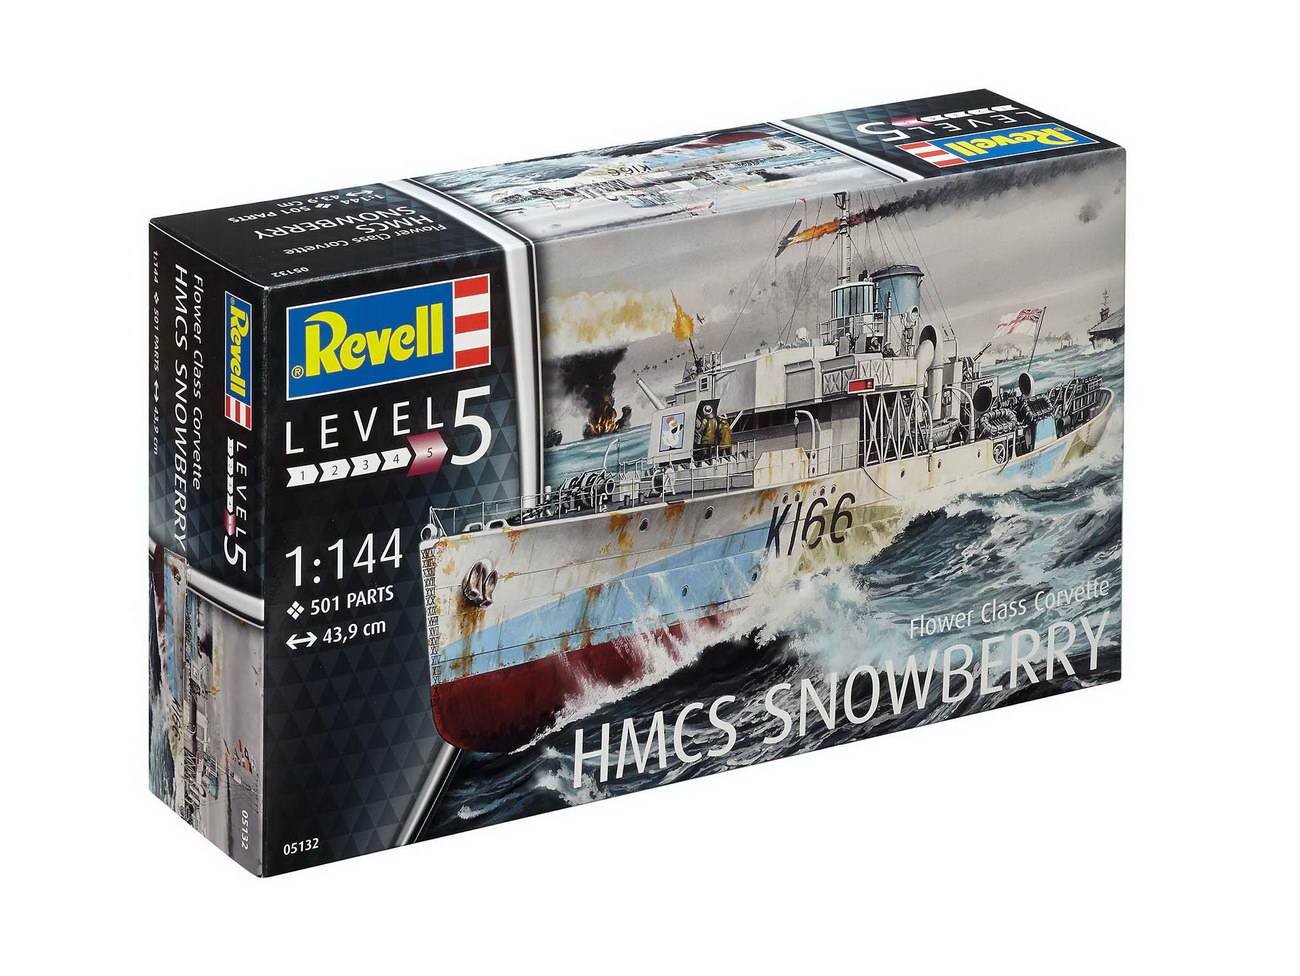 Revell 05132 - Flower Class Corvette HMCS SNOWBERRY Modellbau